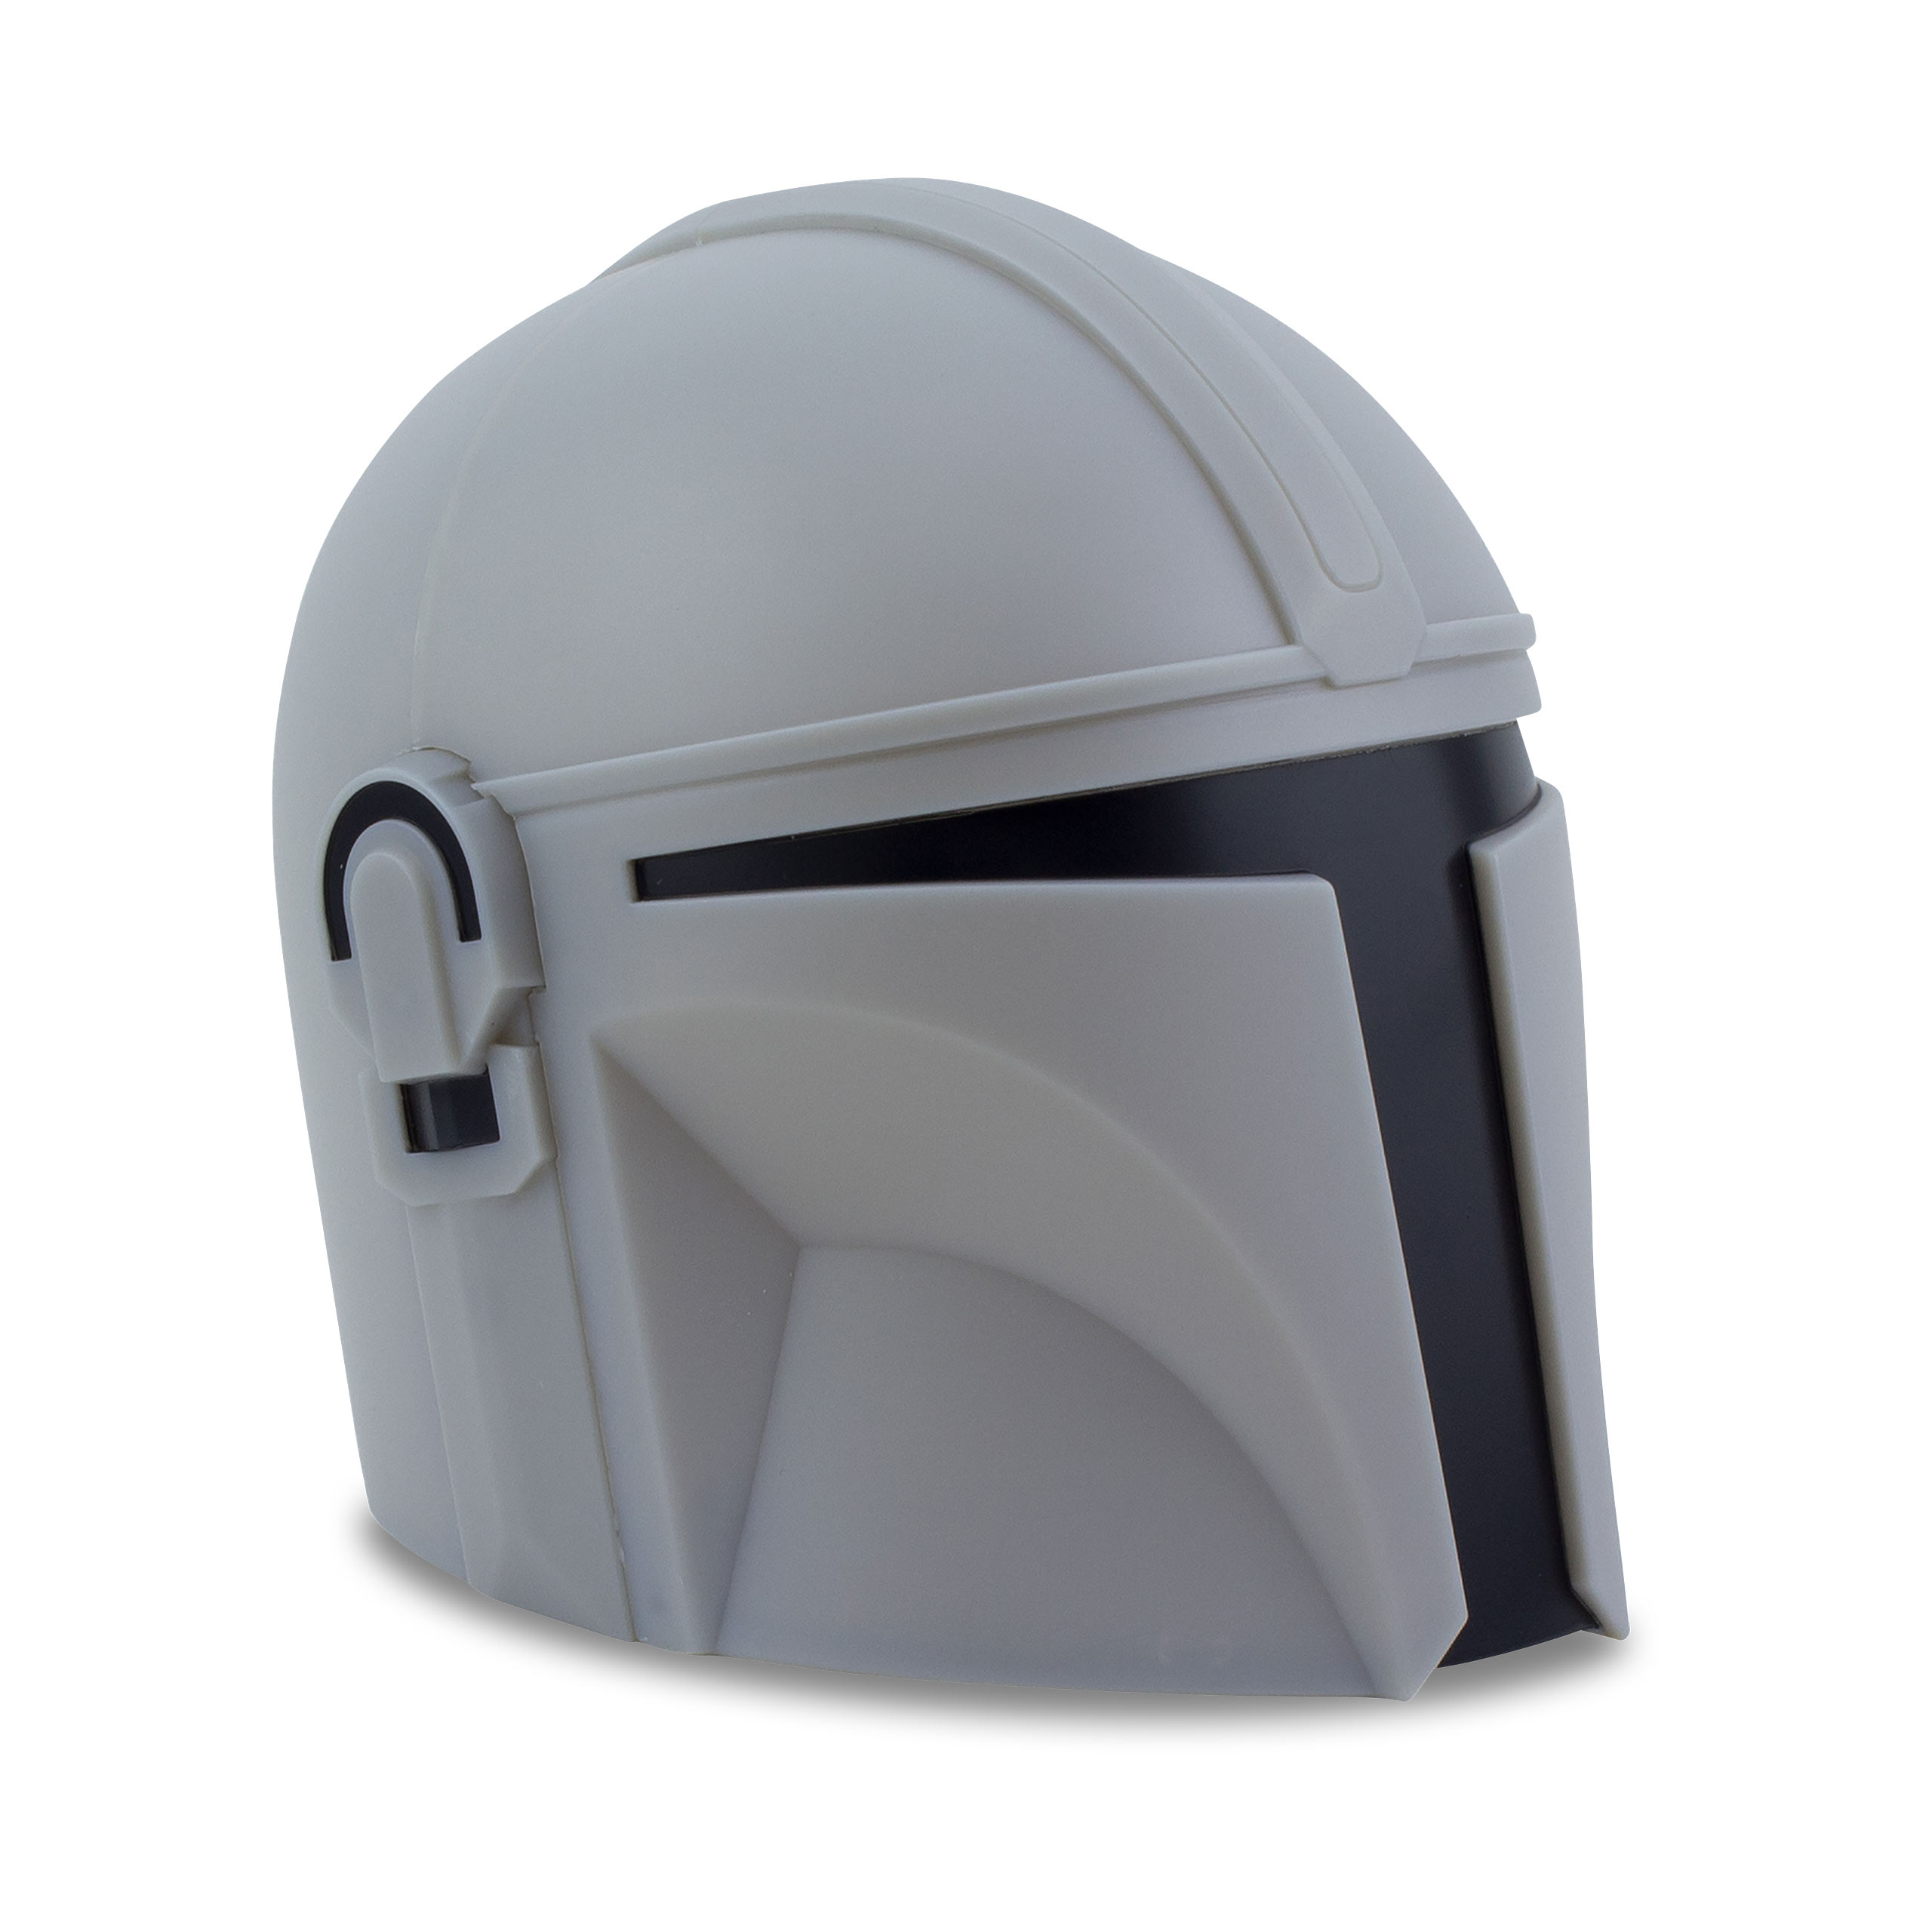 The Mandalorian Helmet Table Lamp - Star Wars